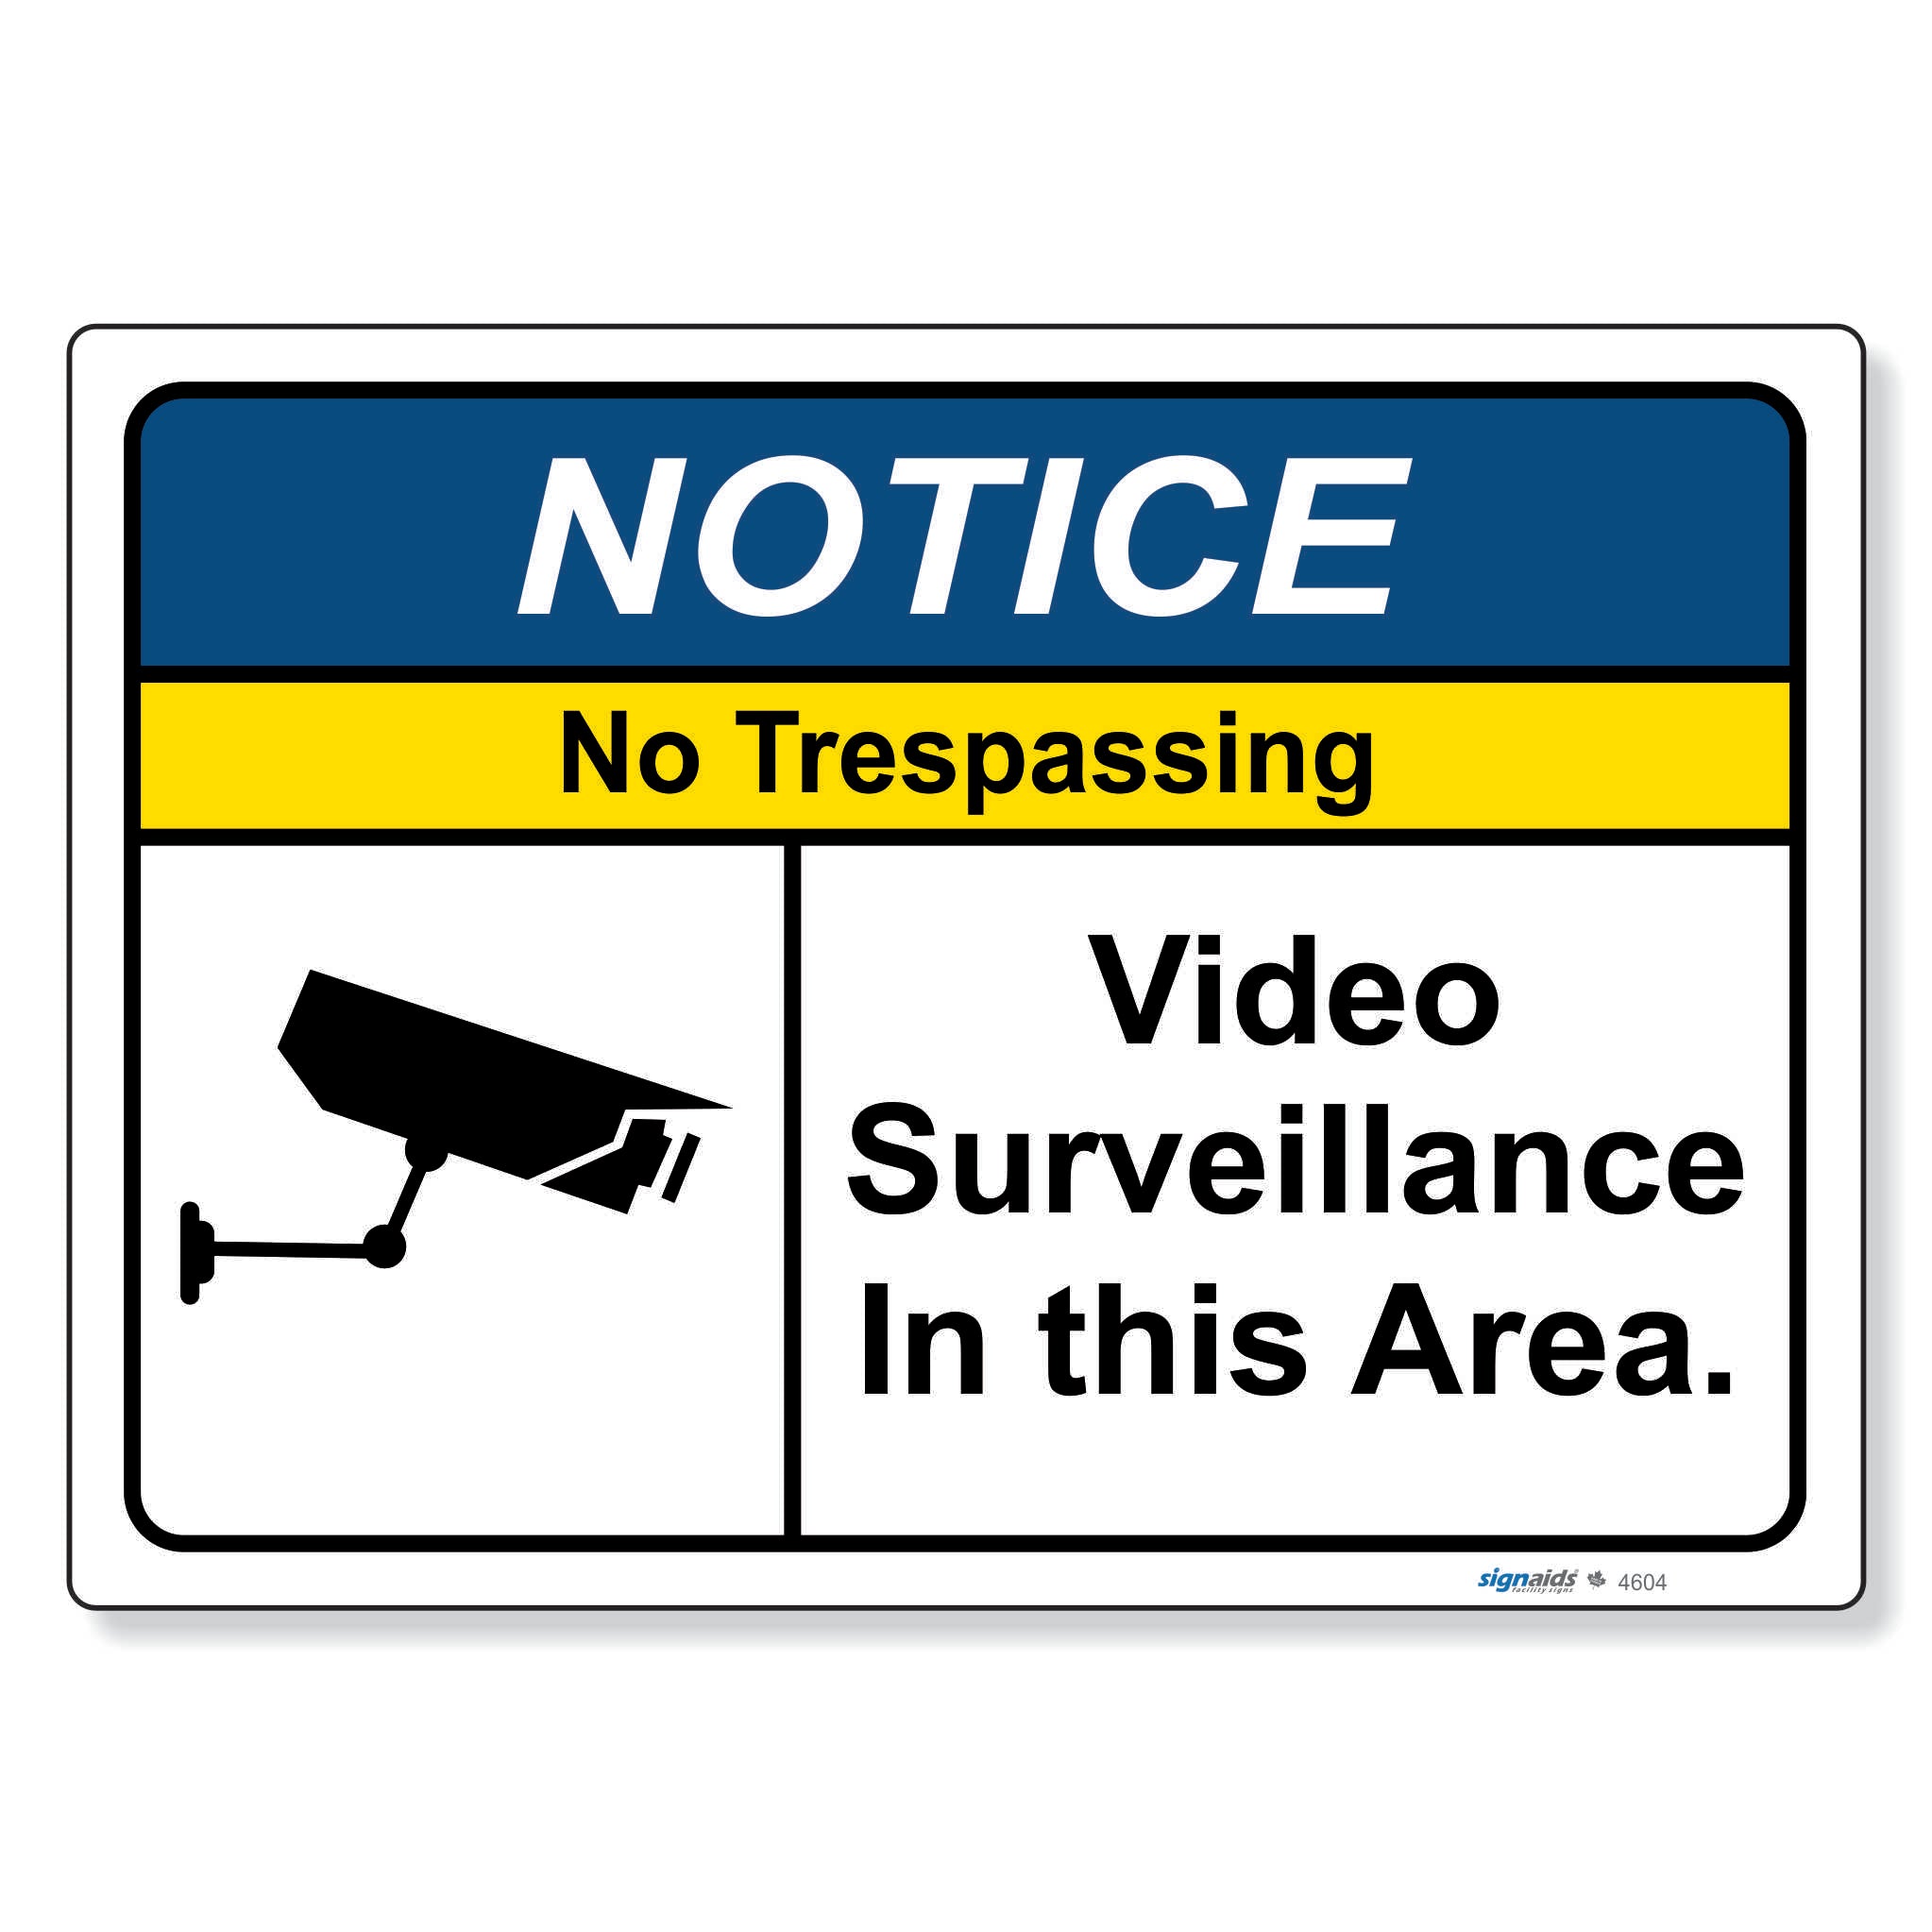 Notice - No Trespassing Video Surveillance